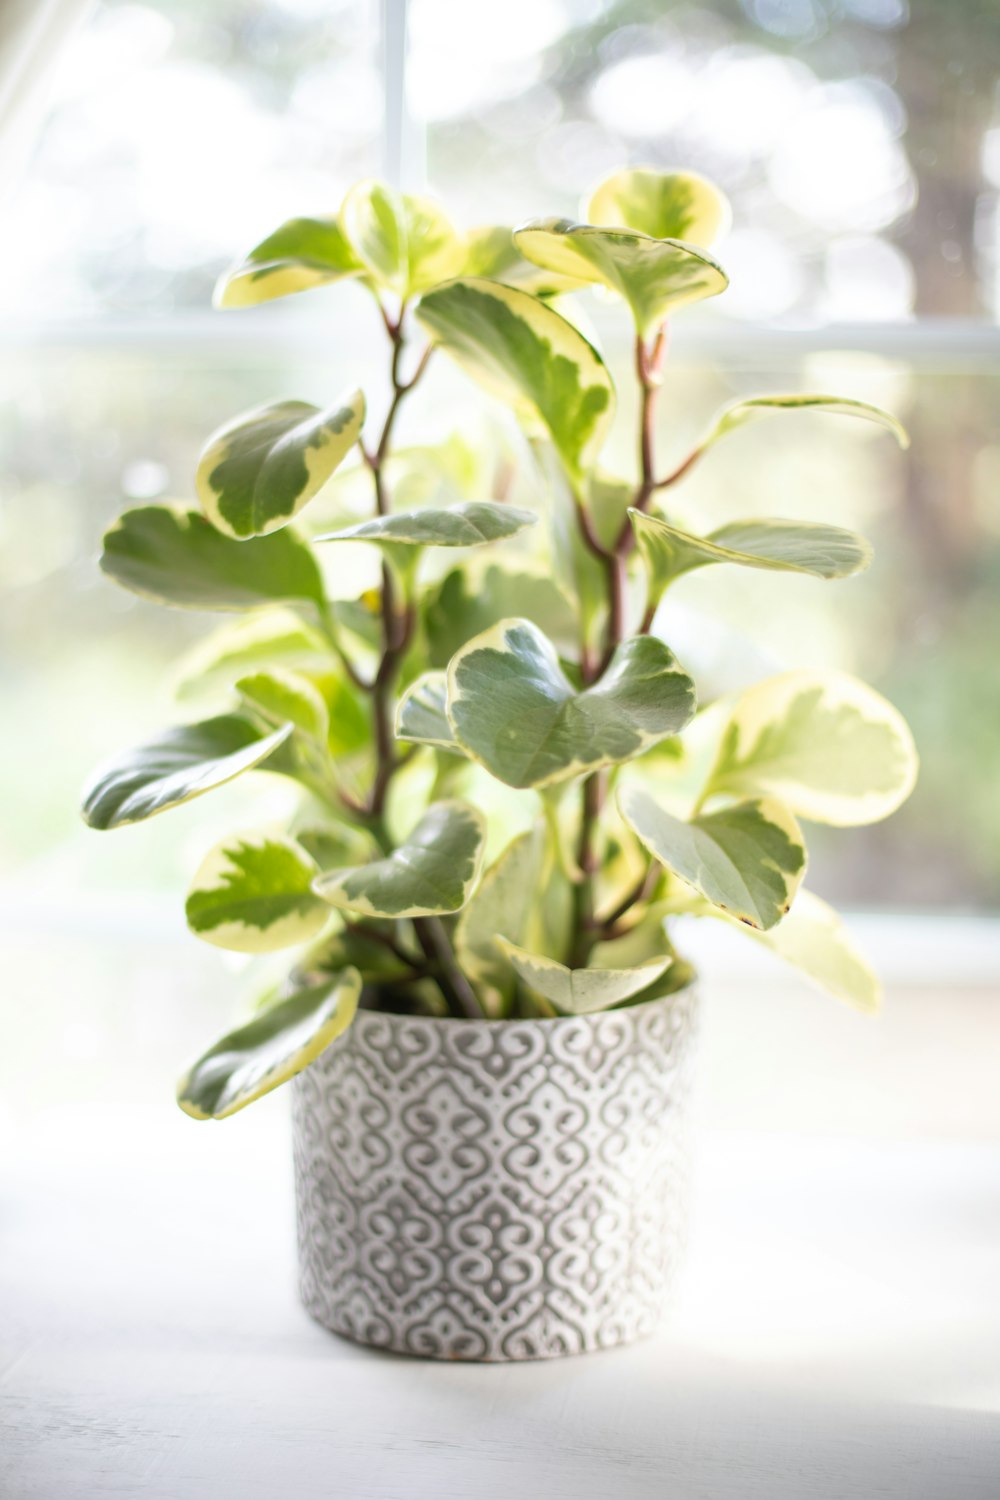 green plant in white and blue ceramic vase